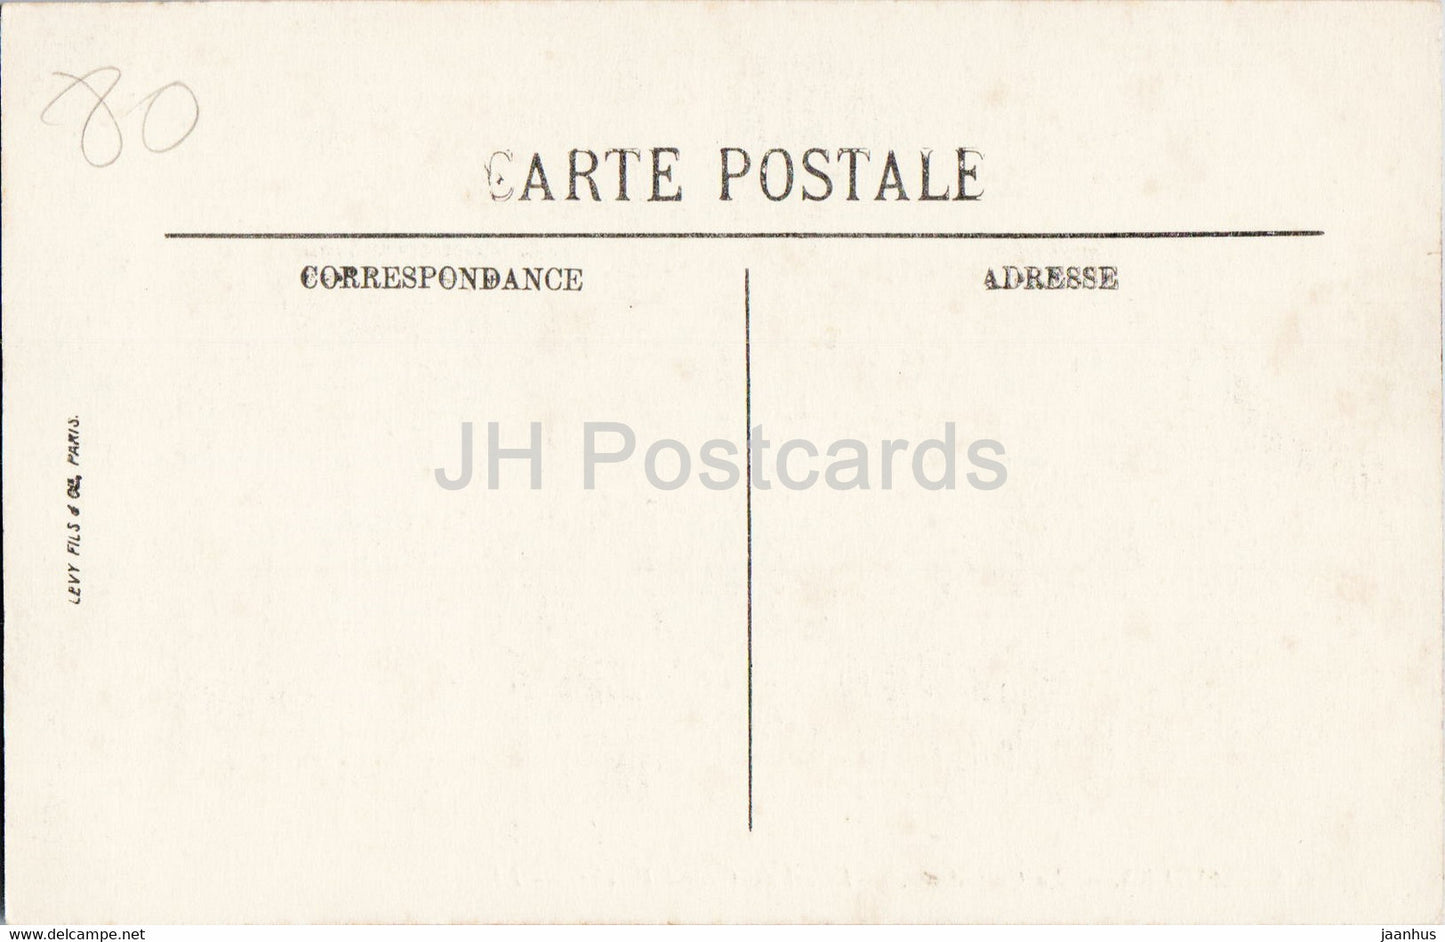 Amiens - La Cathedrale - Detail du Grand Porche - LL - Kathedrale - alte Postkarte - Frankreich - unbenutzt